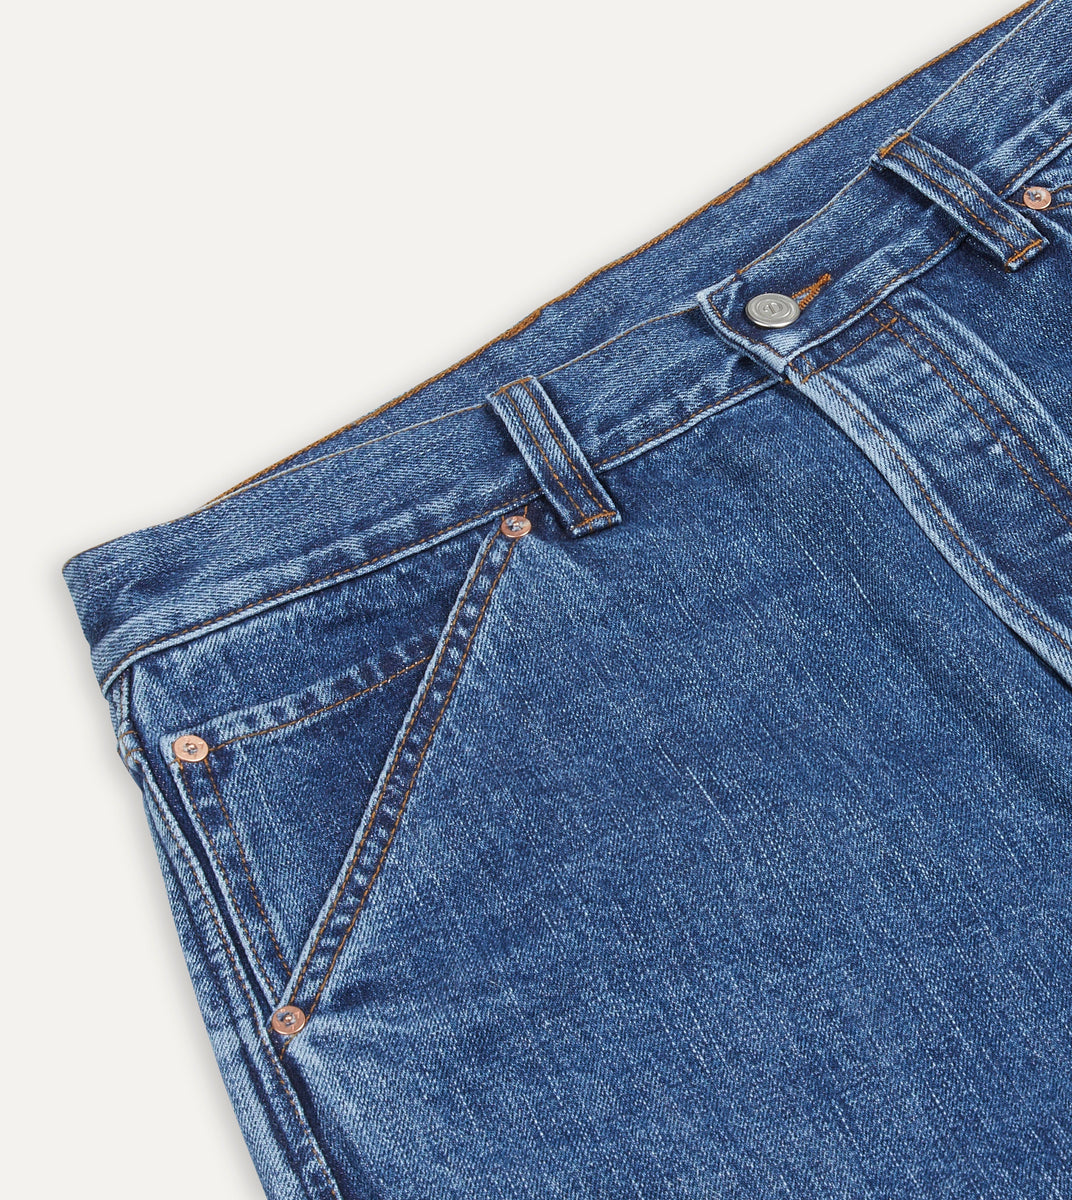 Bleach Wash Denim Japanese Jeans 14.2oz – Selvedge Drakes US Five-Pocket